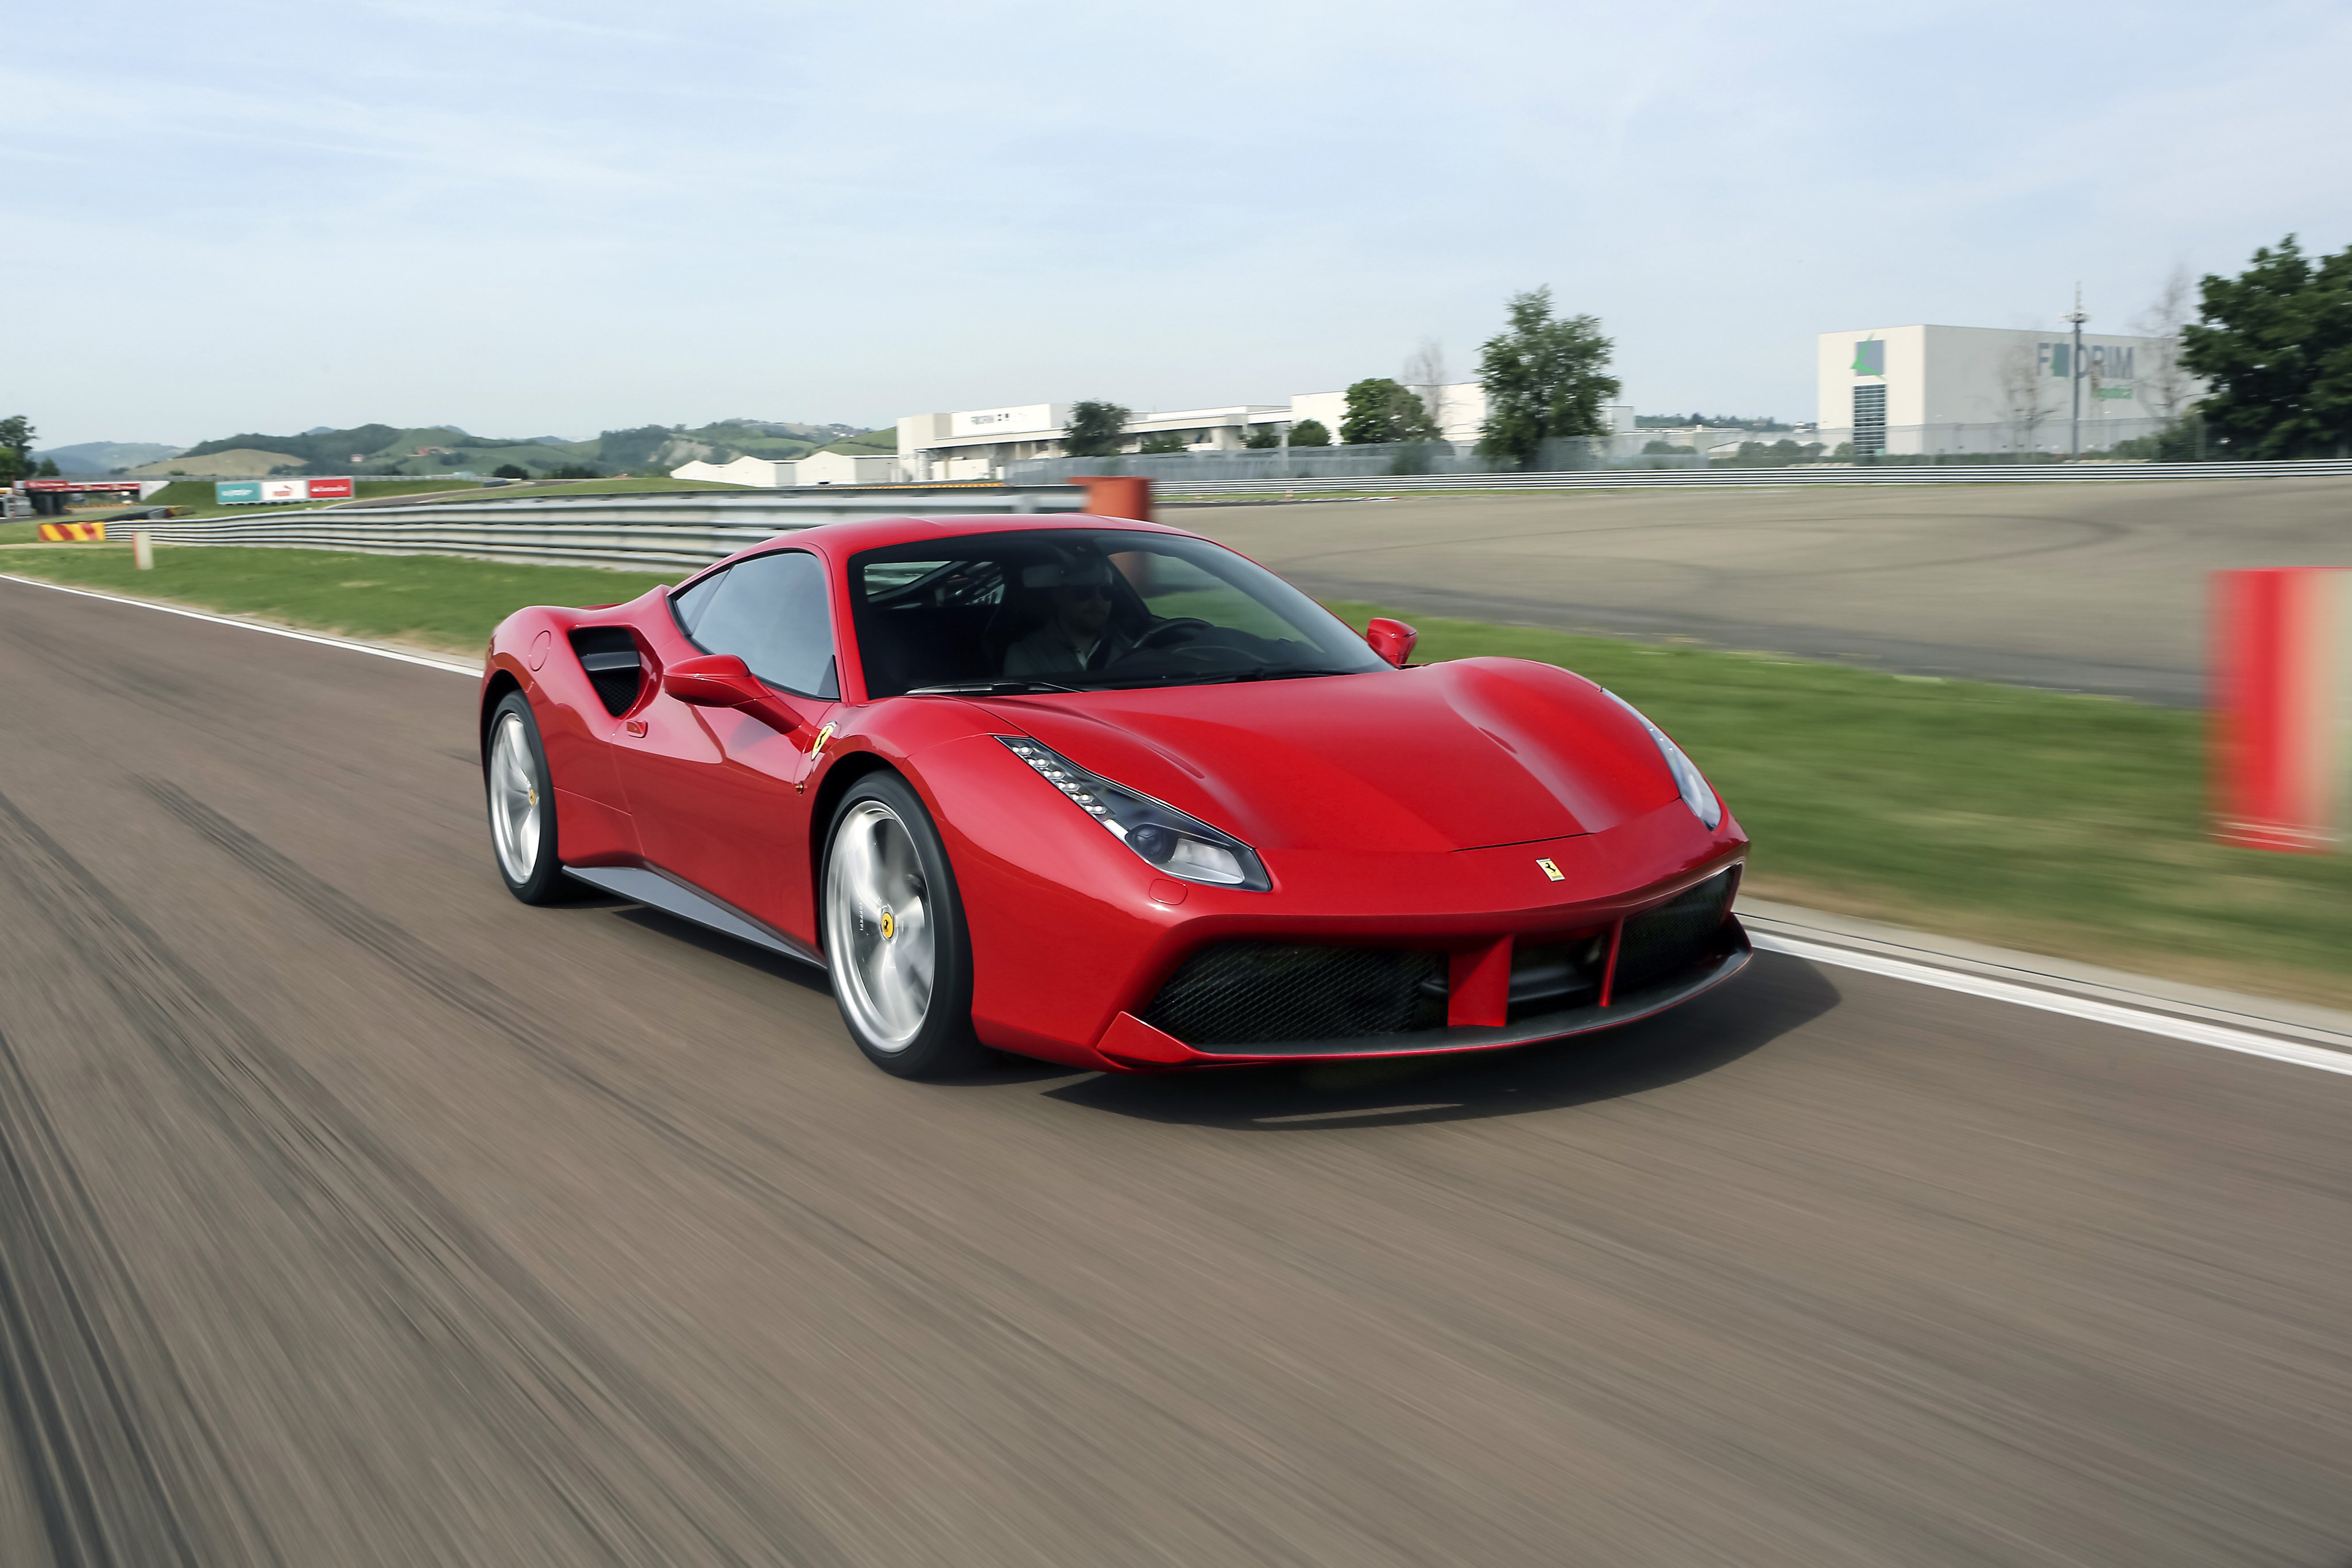 2015 Ferrari 488 Gtb Supercar Wallpapers Hd Desktop And Mobile